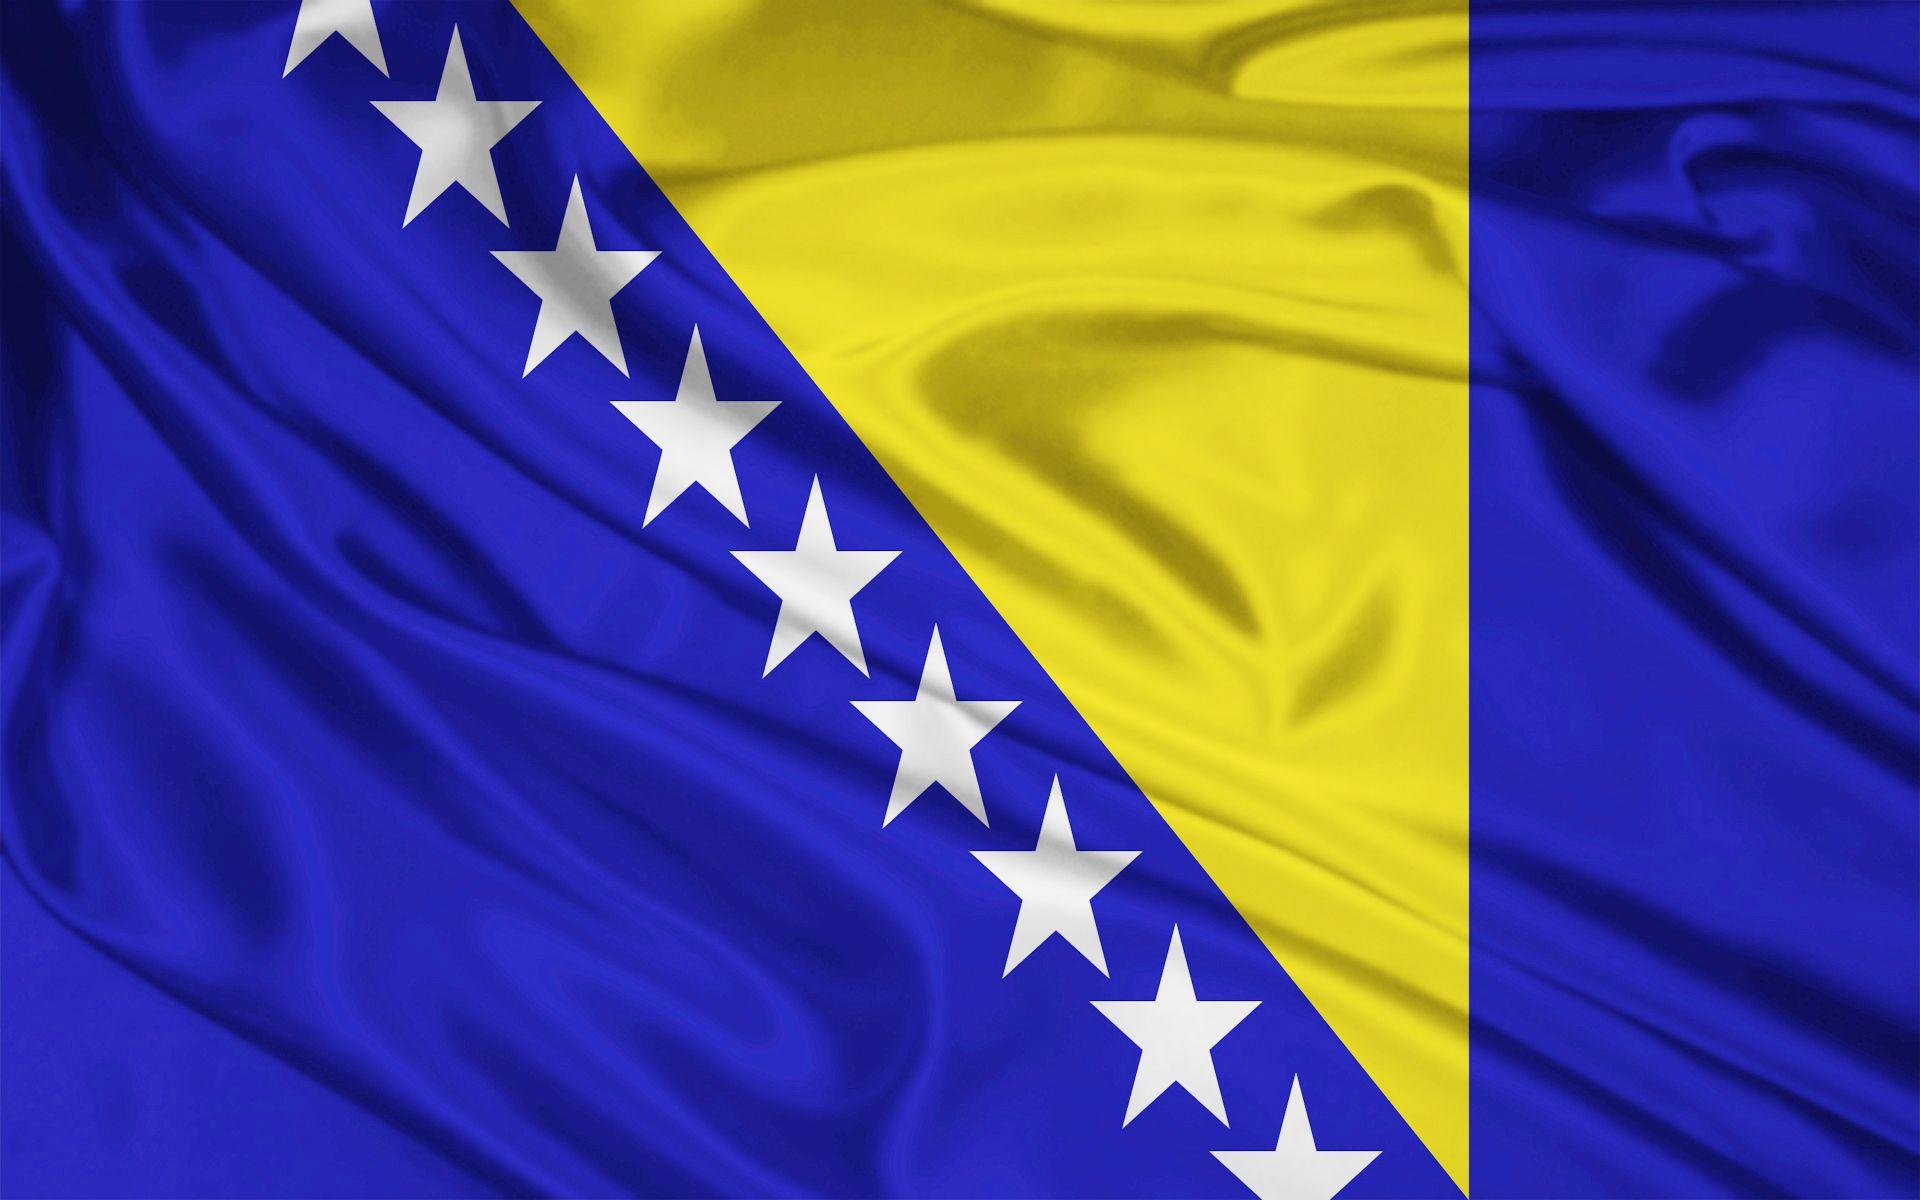 Bosnia and Herzegovina Flag wallpaper. Bosnia and Herzegovina